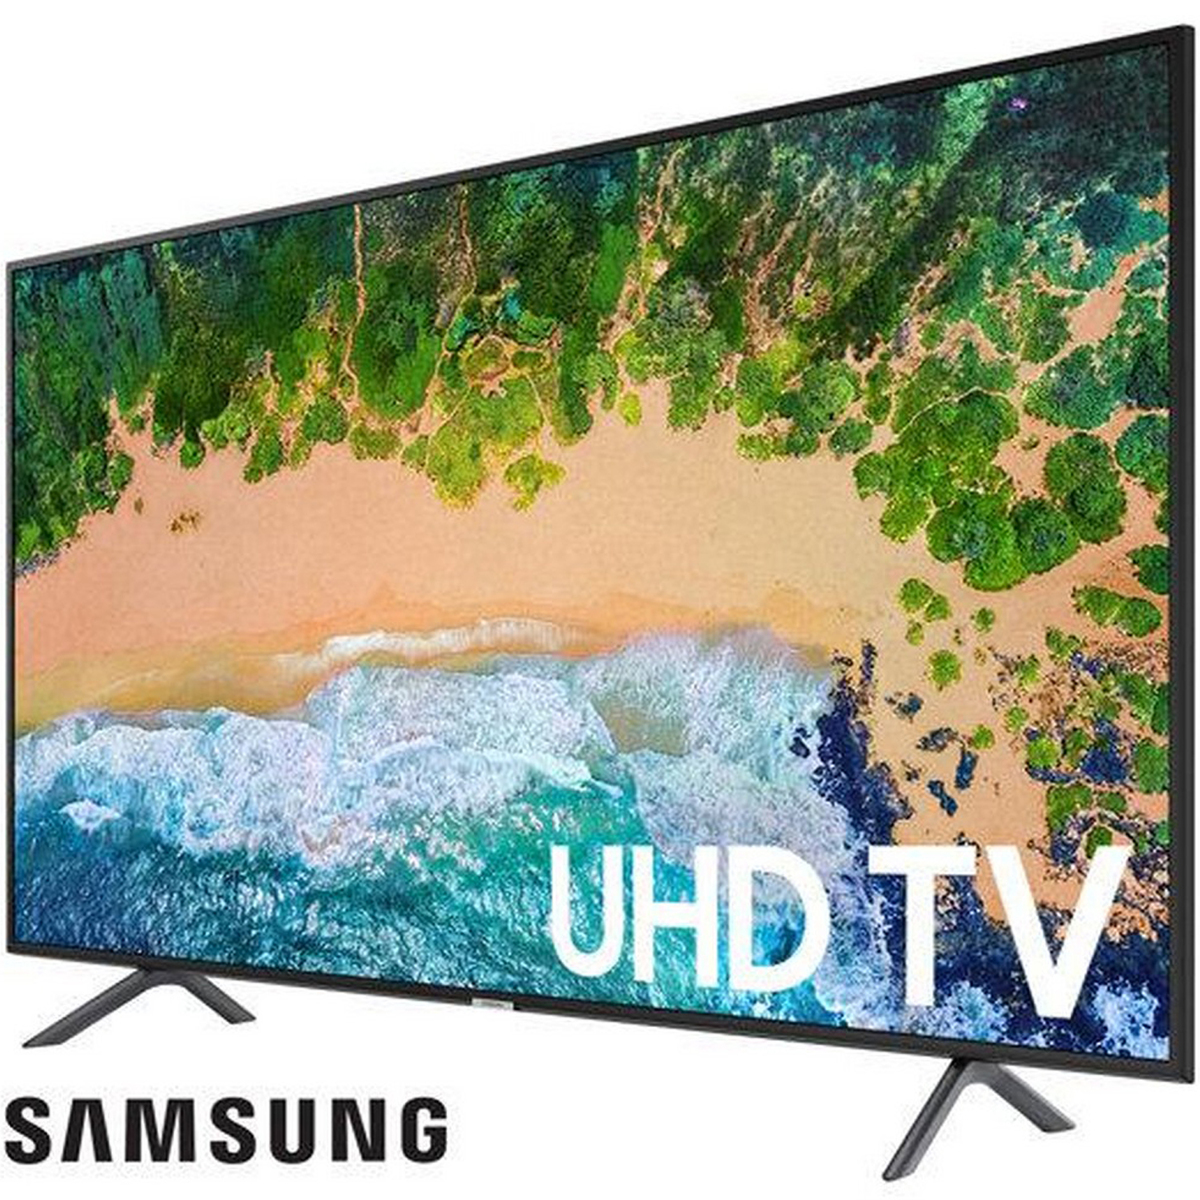 15+ Samsung uhd 4k smart led tv 43 inch ua43nu7100 ideas